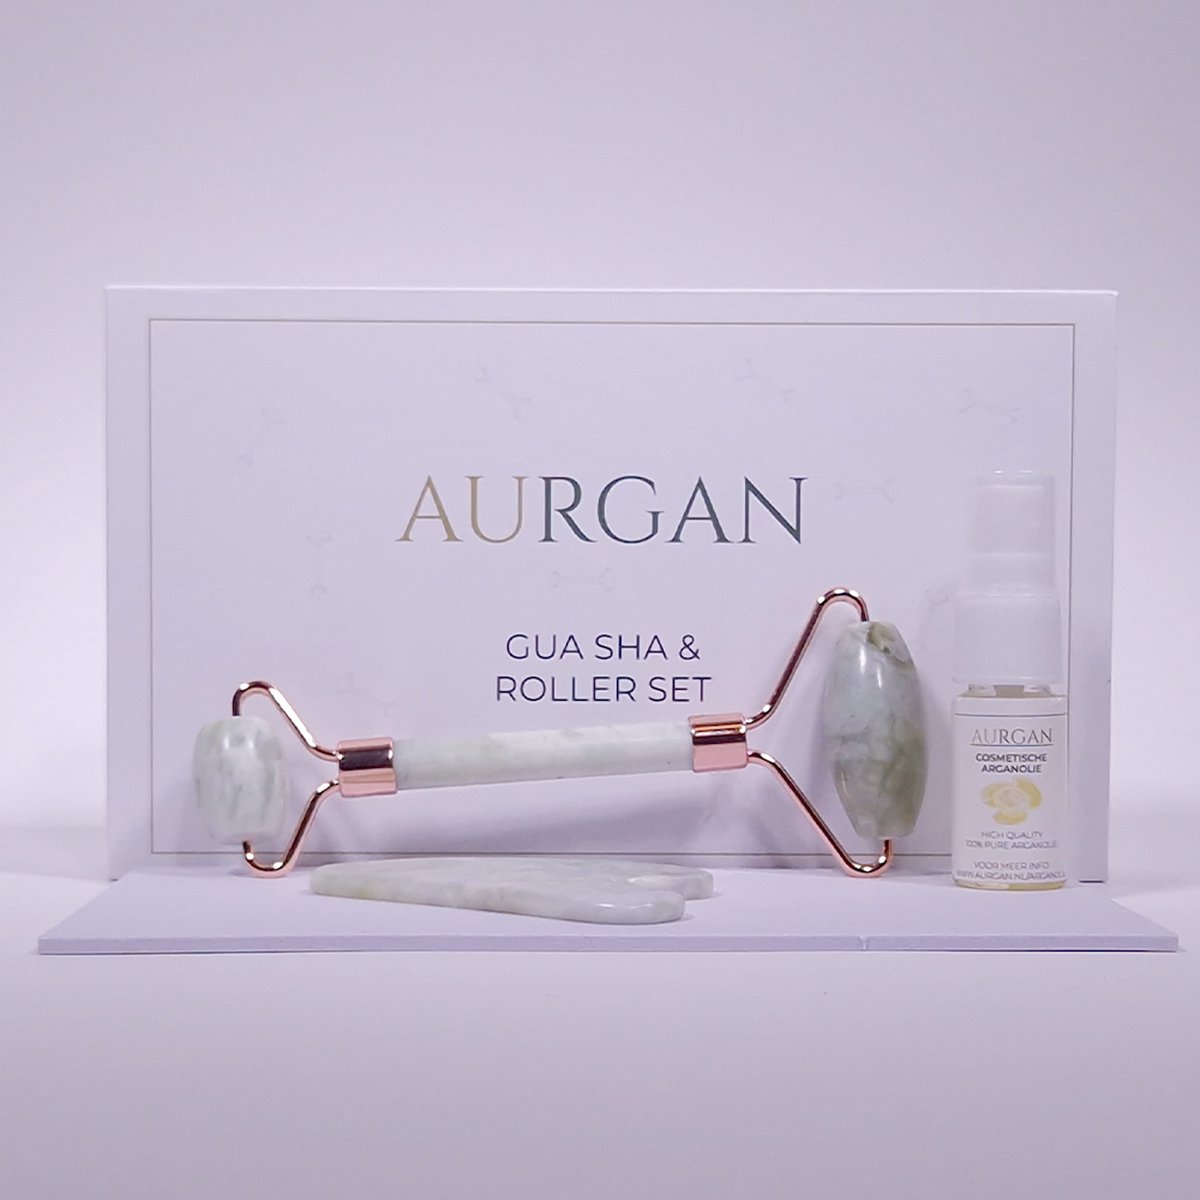 Aurgan Milk Jade Roller met Milk Jade Gua Sha steen - inclusief 10ml arganolie - massage - Stimuleert doorbloeding - Anti rimpel massage - melkjade